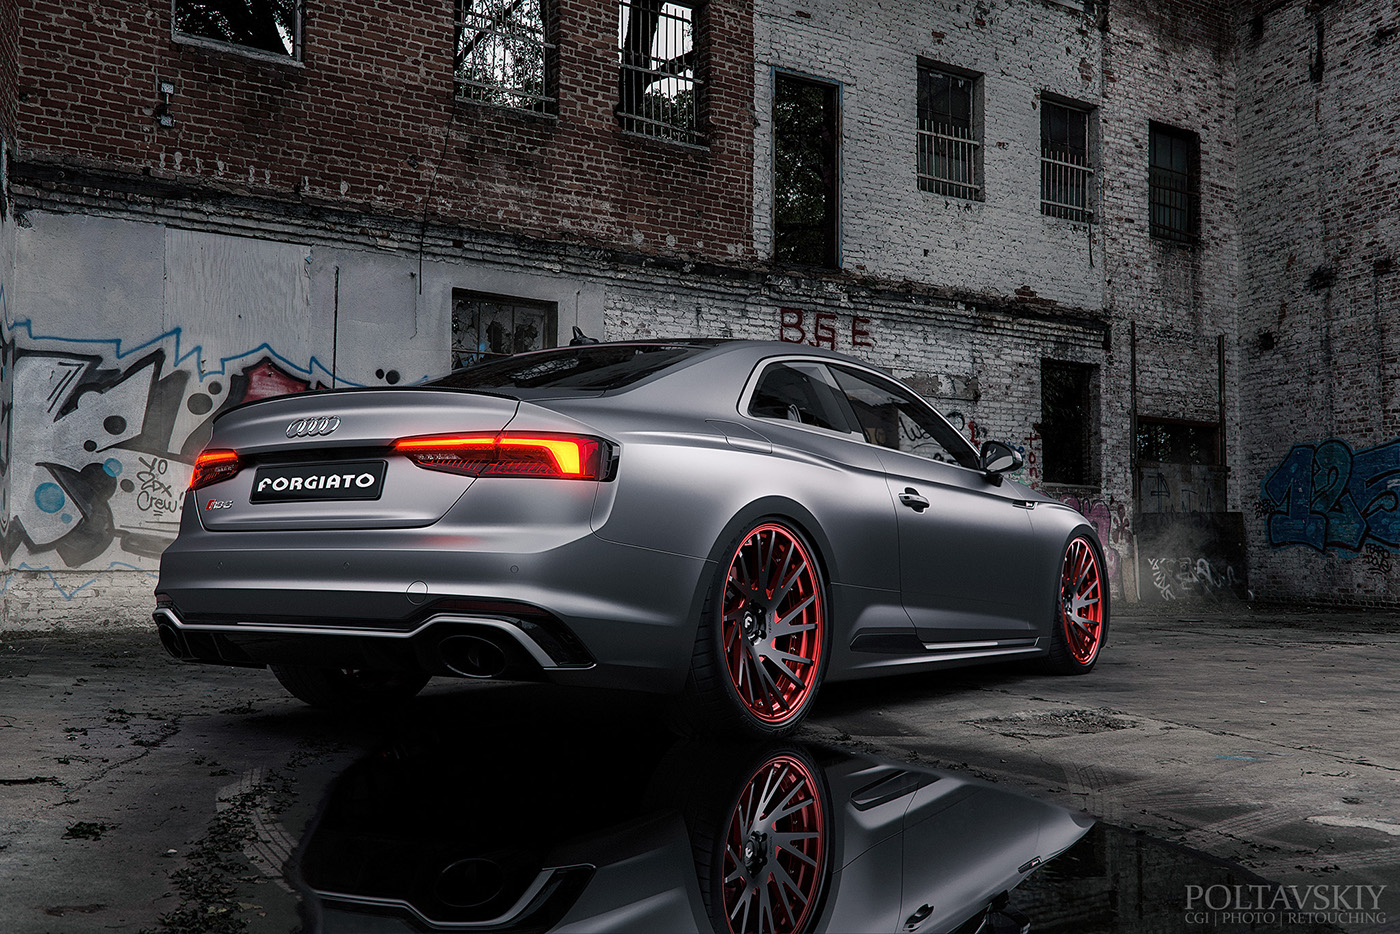 Porsche BMW mercedes CGI Render backplate Photography  HDRI 3D automotive  